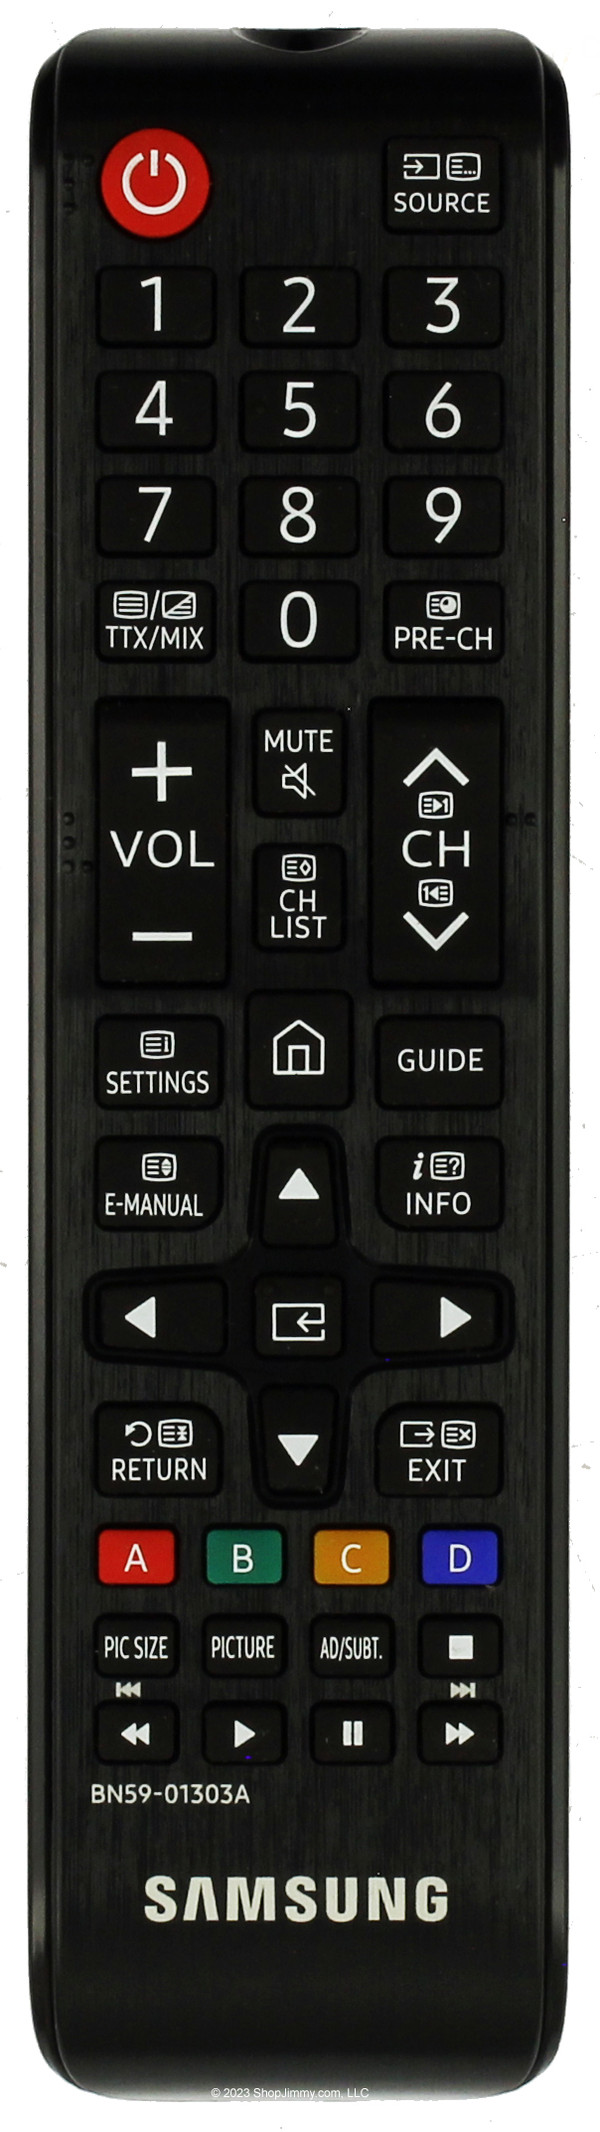 Samsung BN59-01303A Remote Control -- Open Bag